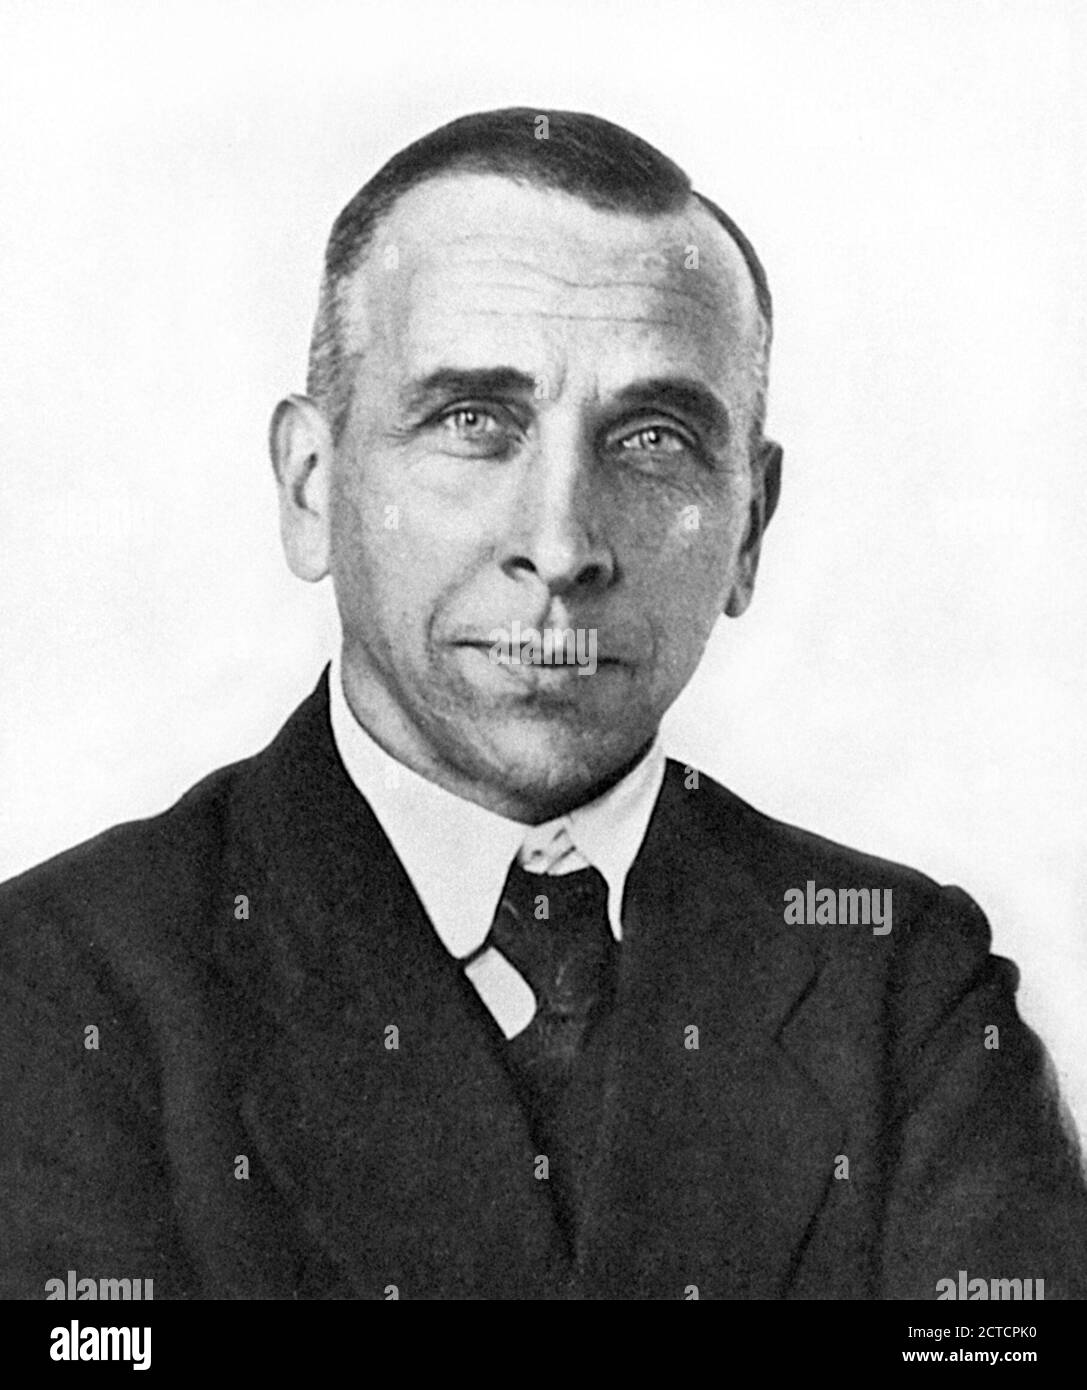 Alfred Wegener. Portrait of the German polar researcher, geophysicist and meteorologist, Alfred Lothar Wegener (1880-1930), c.1924 Stock Photo